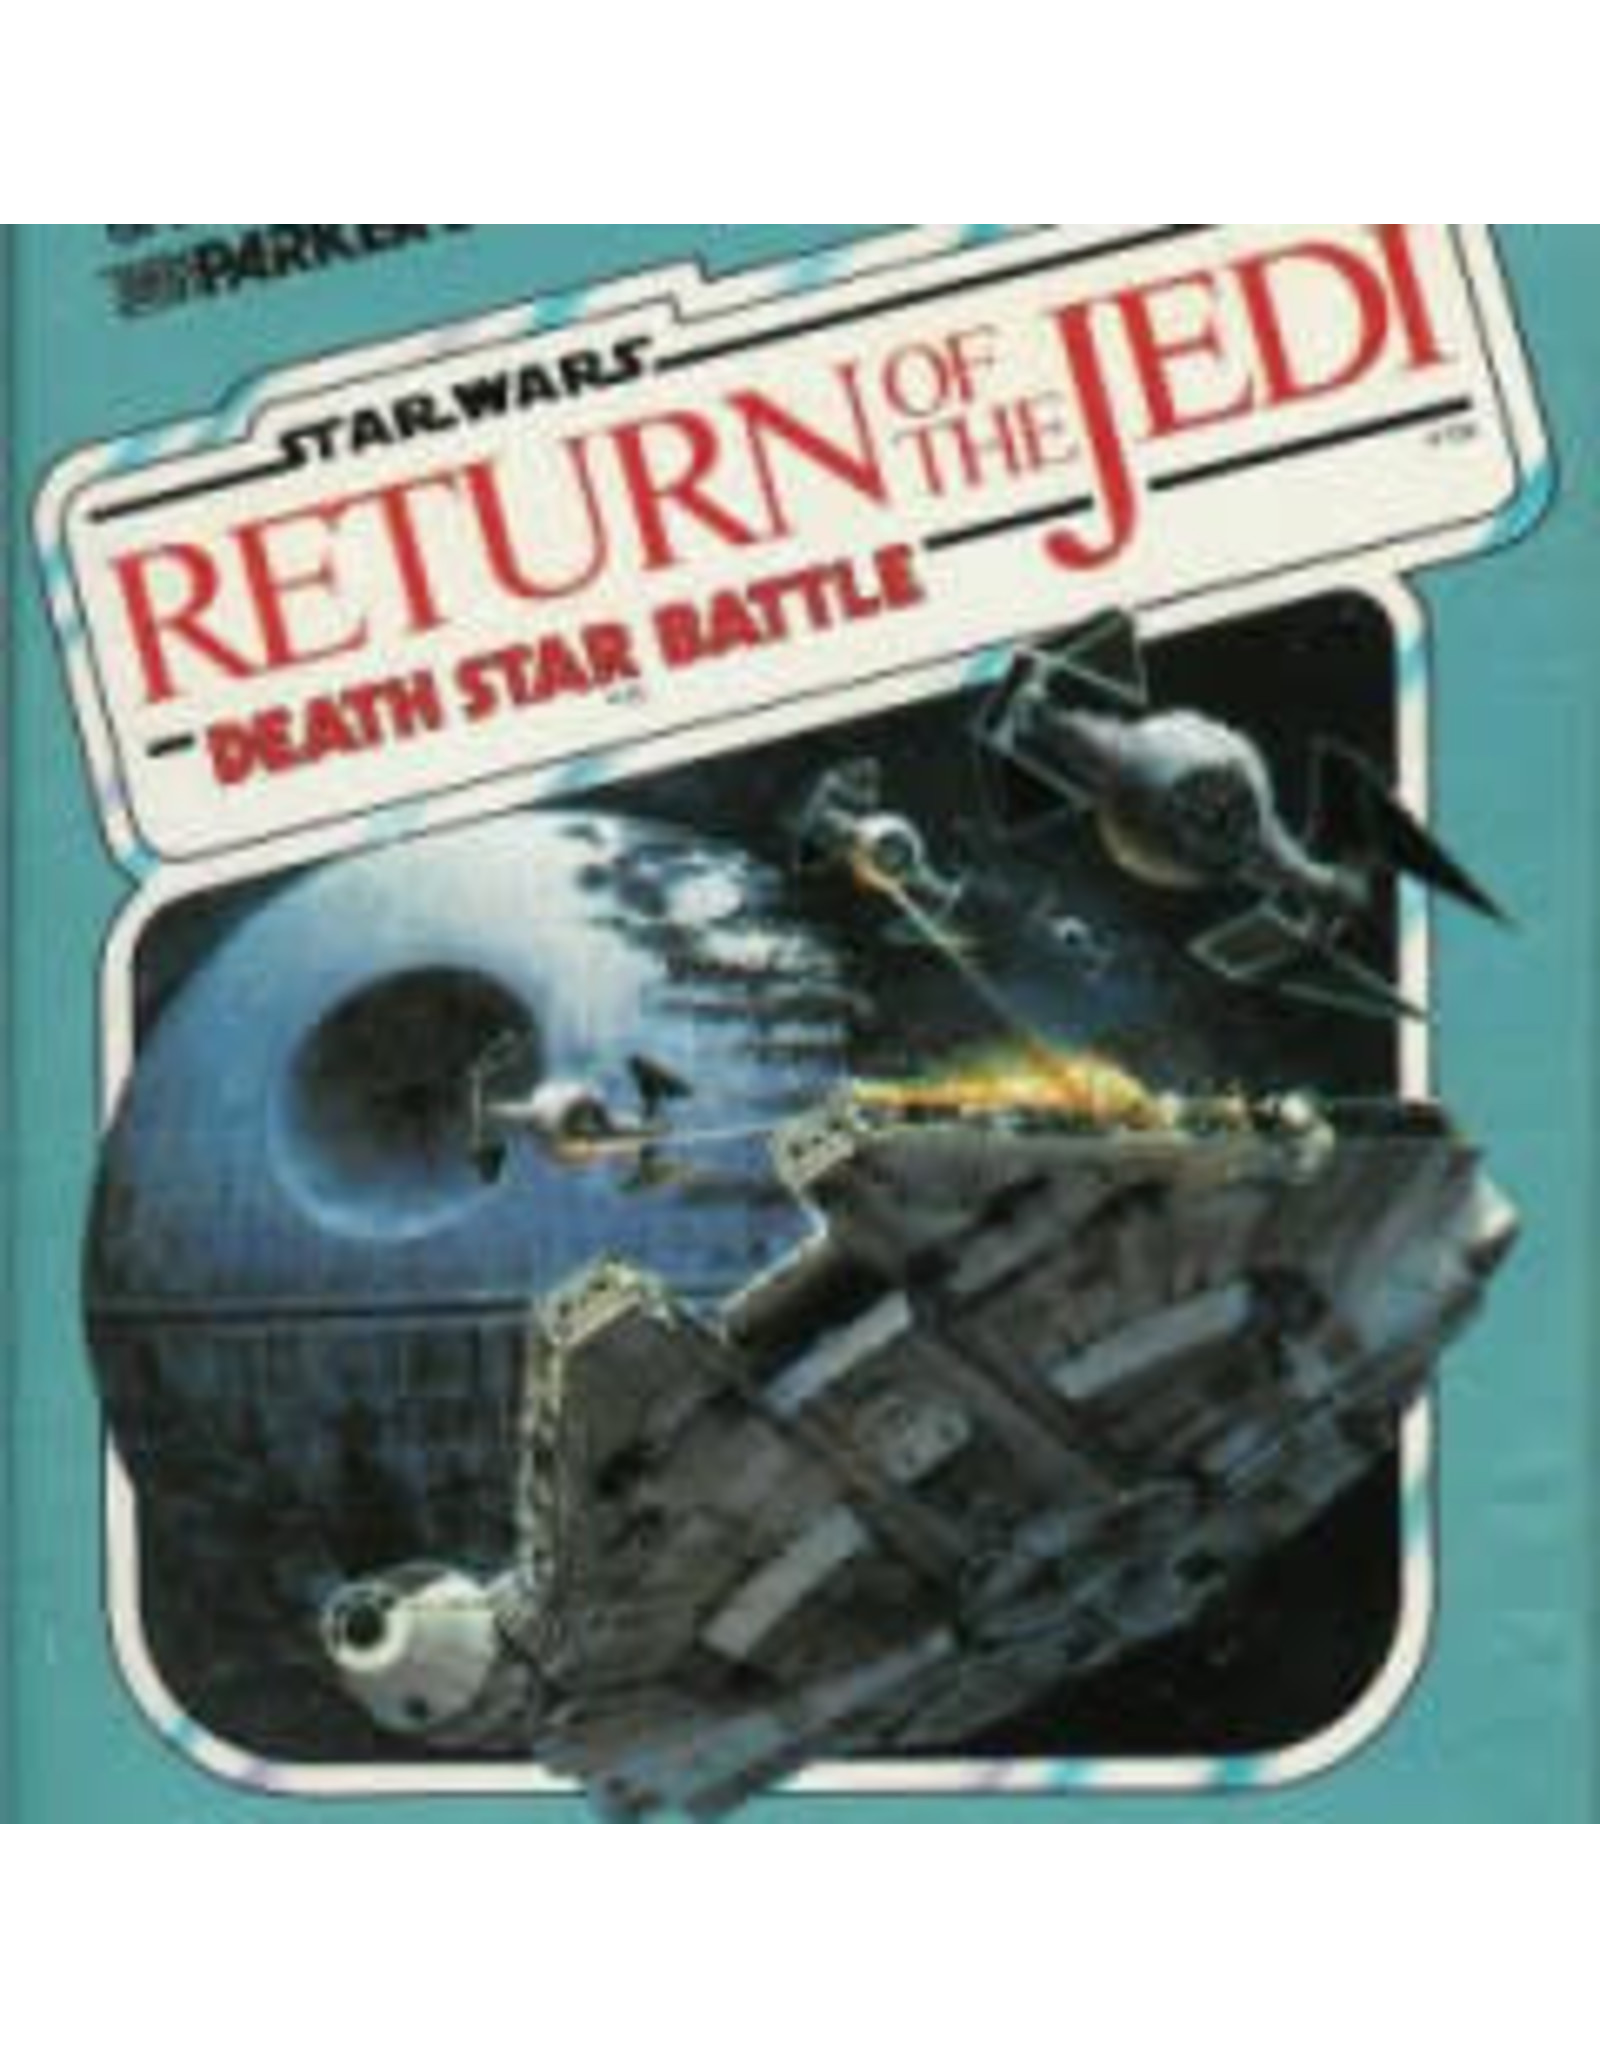 Atari 5200 Star Wars: Return of the Jedi Death Star Battle (Cart Only, Damaged Label)